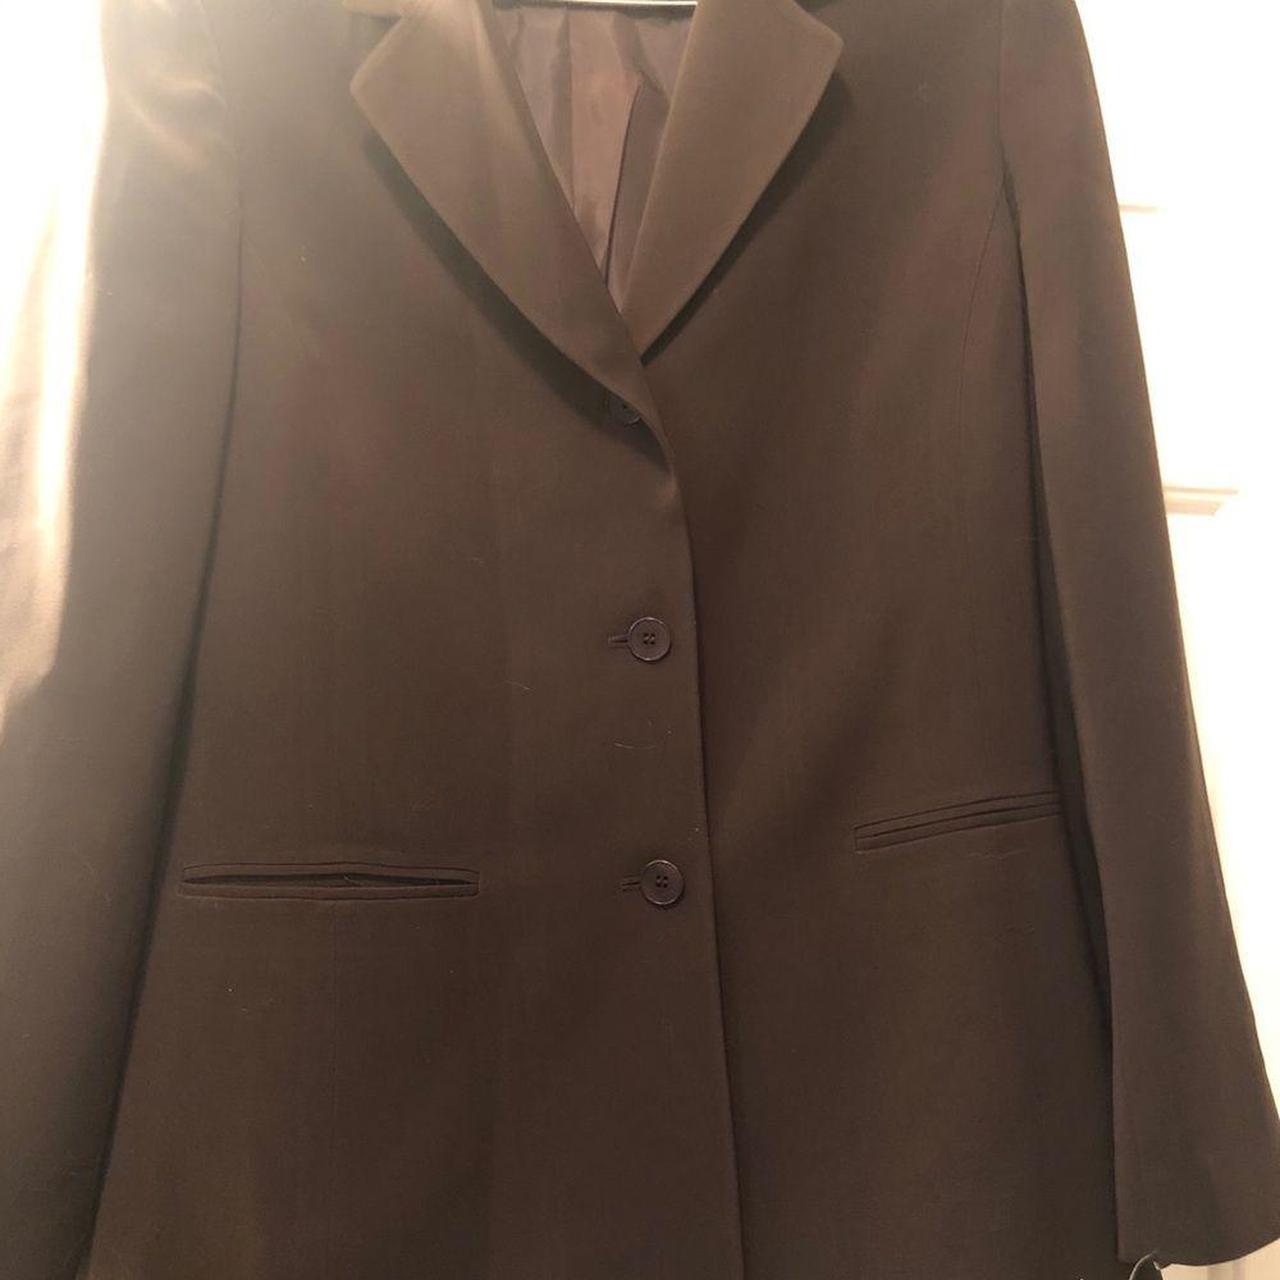 Product Image 4 - Kasper brown blazer classic look